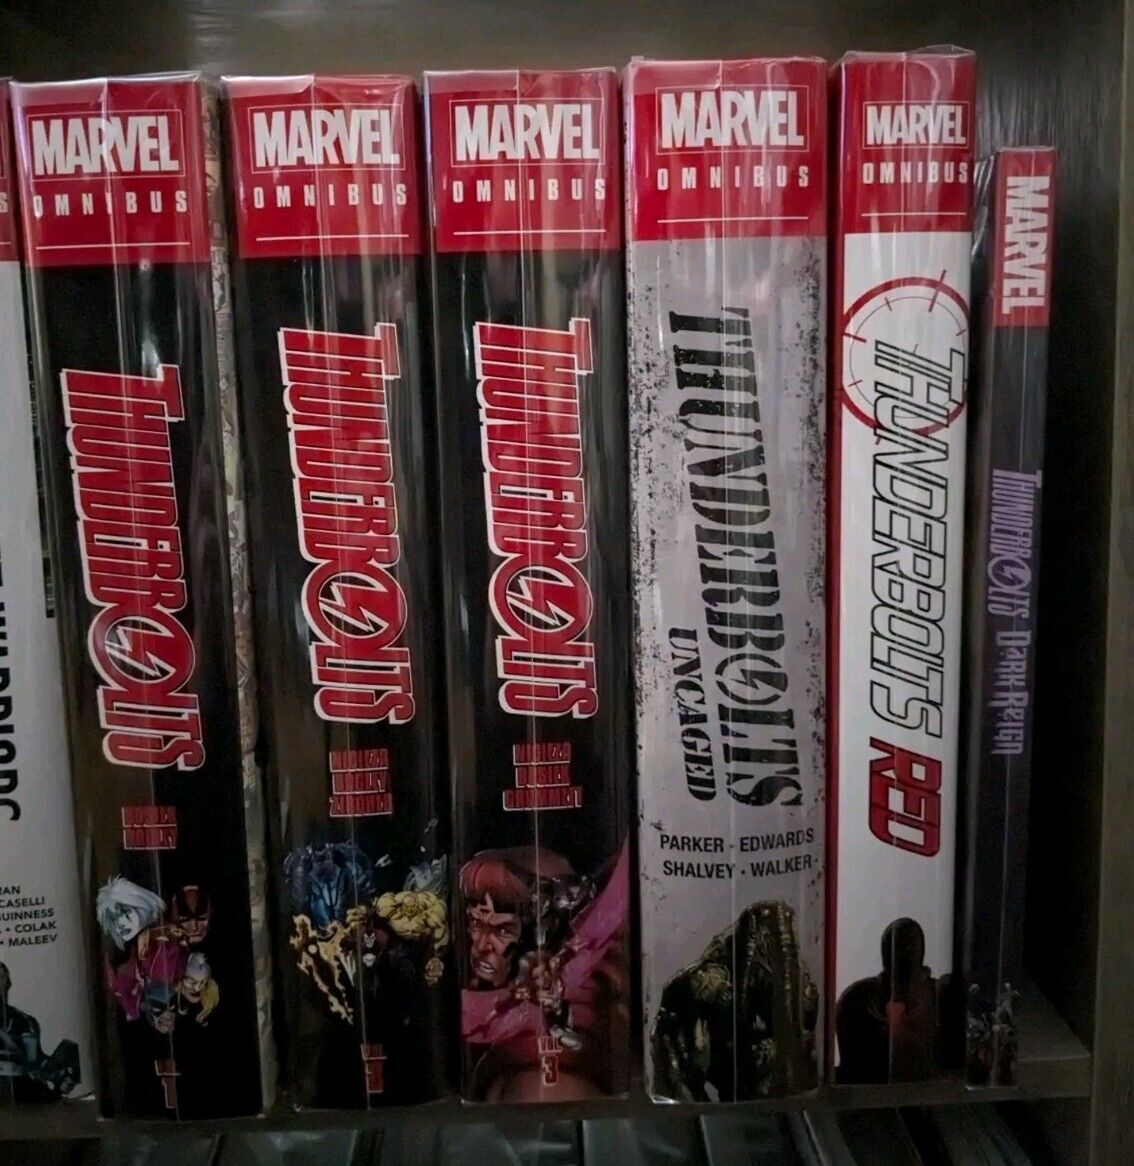 Thunderbolts Omnibus Lot of 6, 1-3, Red, Uncaged, Dark Reign TPB, Marvel, NM